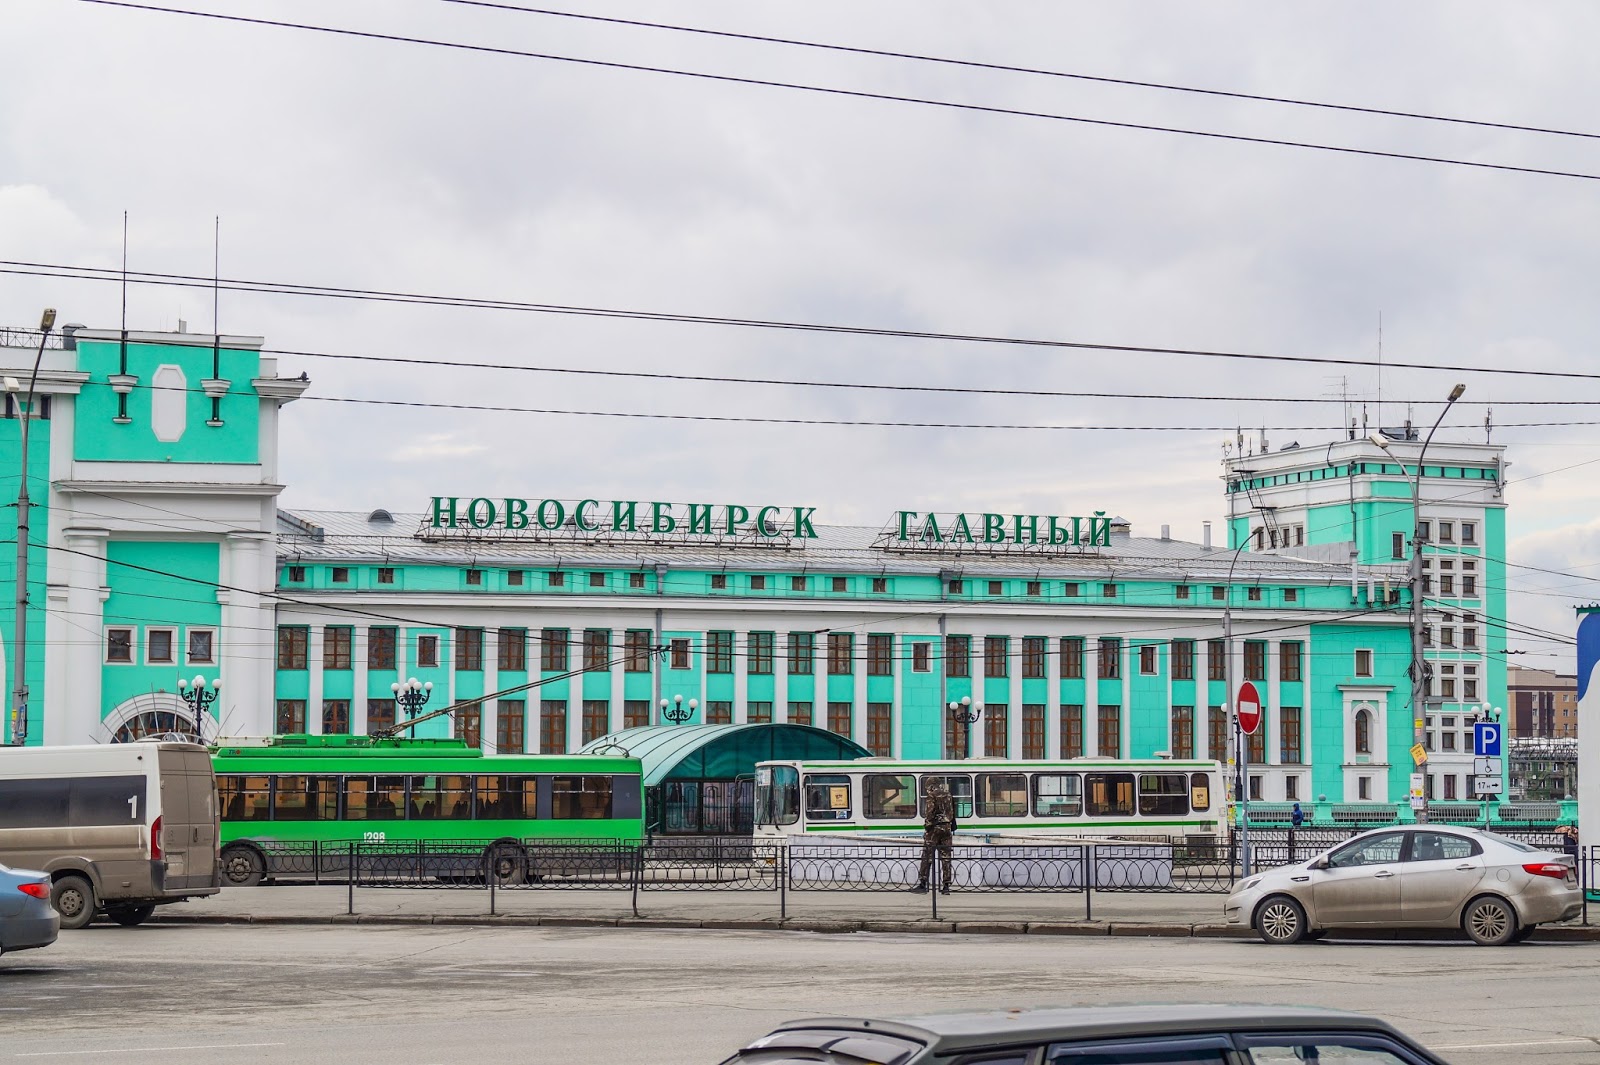 Жд вокзал автобусы телефон. Станция Новосибирск-главный, Новосибирск. Новосибирский главный вокзал главный Новосибирск. Автостанция Новосибирск ЖД вокзал главный. Новосибирск автостанции на вокзале.